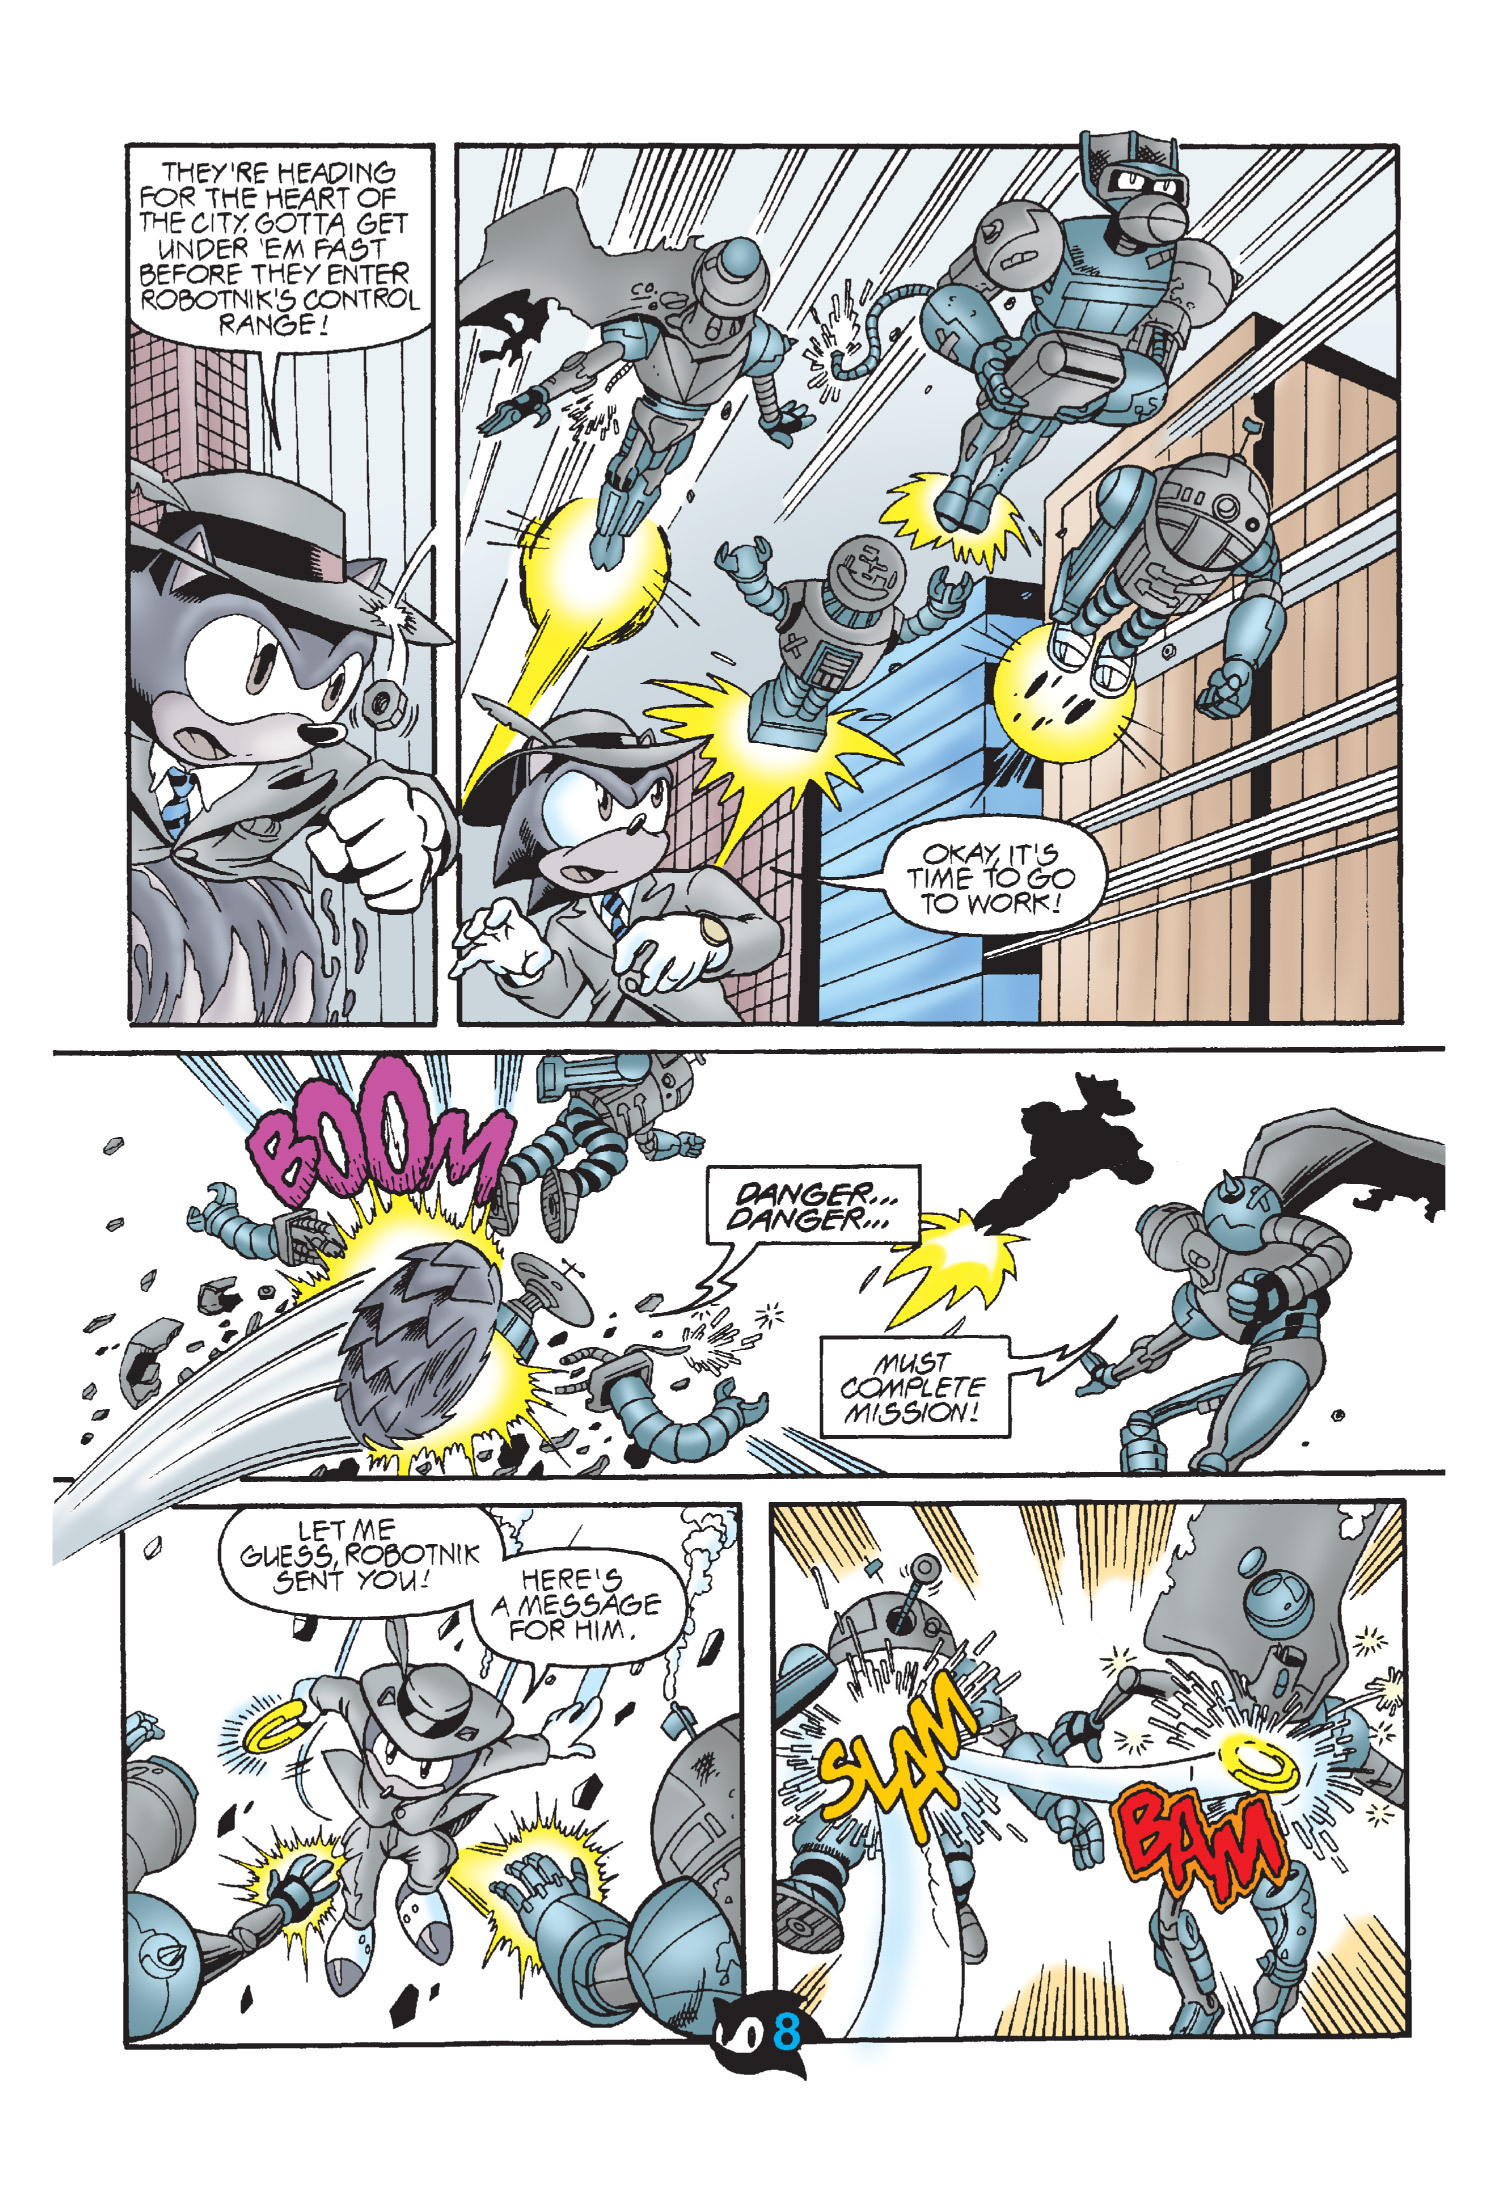 Super Comics: Sonic the Hedgehog (IDW) – #9 – The Reviewers Unite